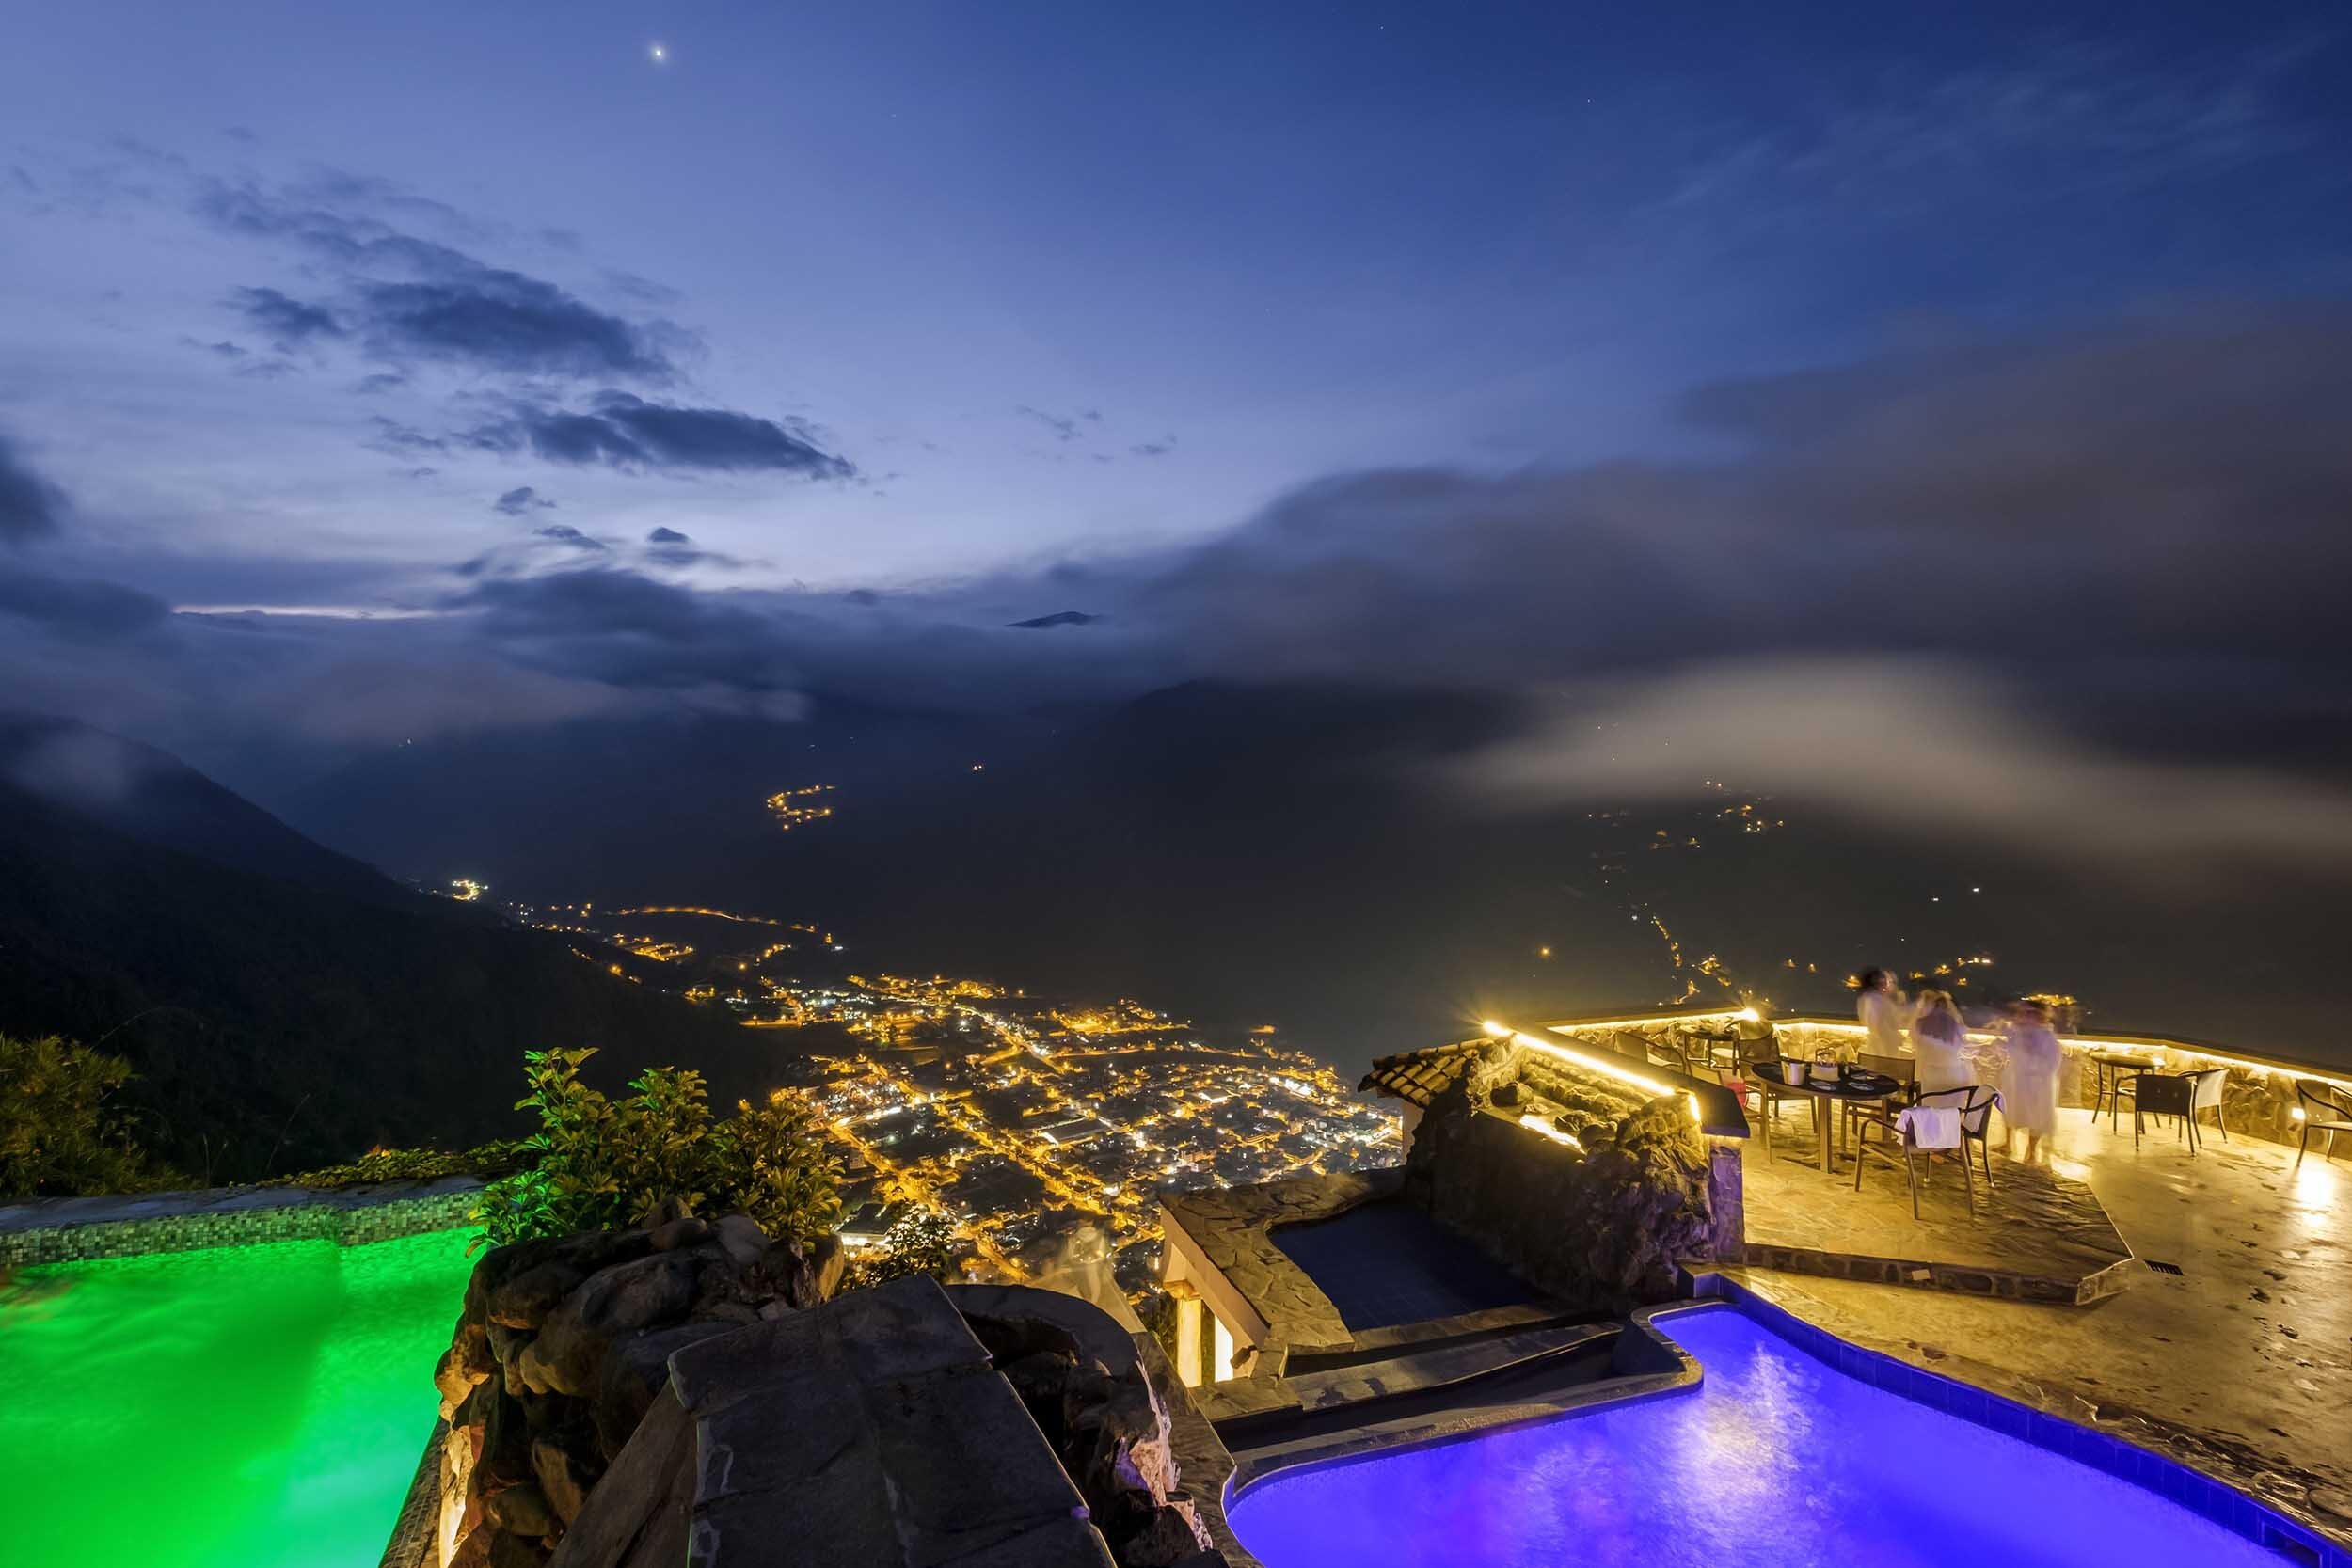 4 pools e Jacuzzi with volcanic hot water - Luna Volcan - Hotel en Banos Ecuador.jpg